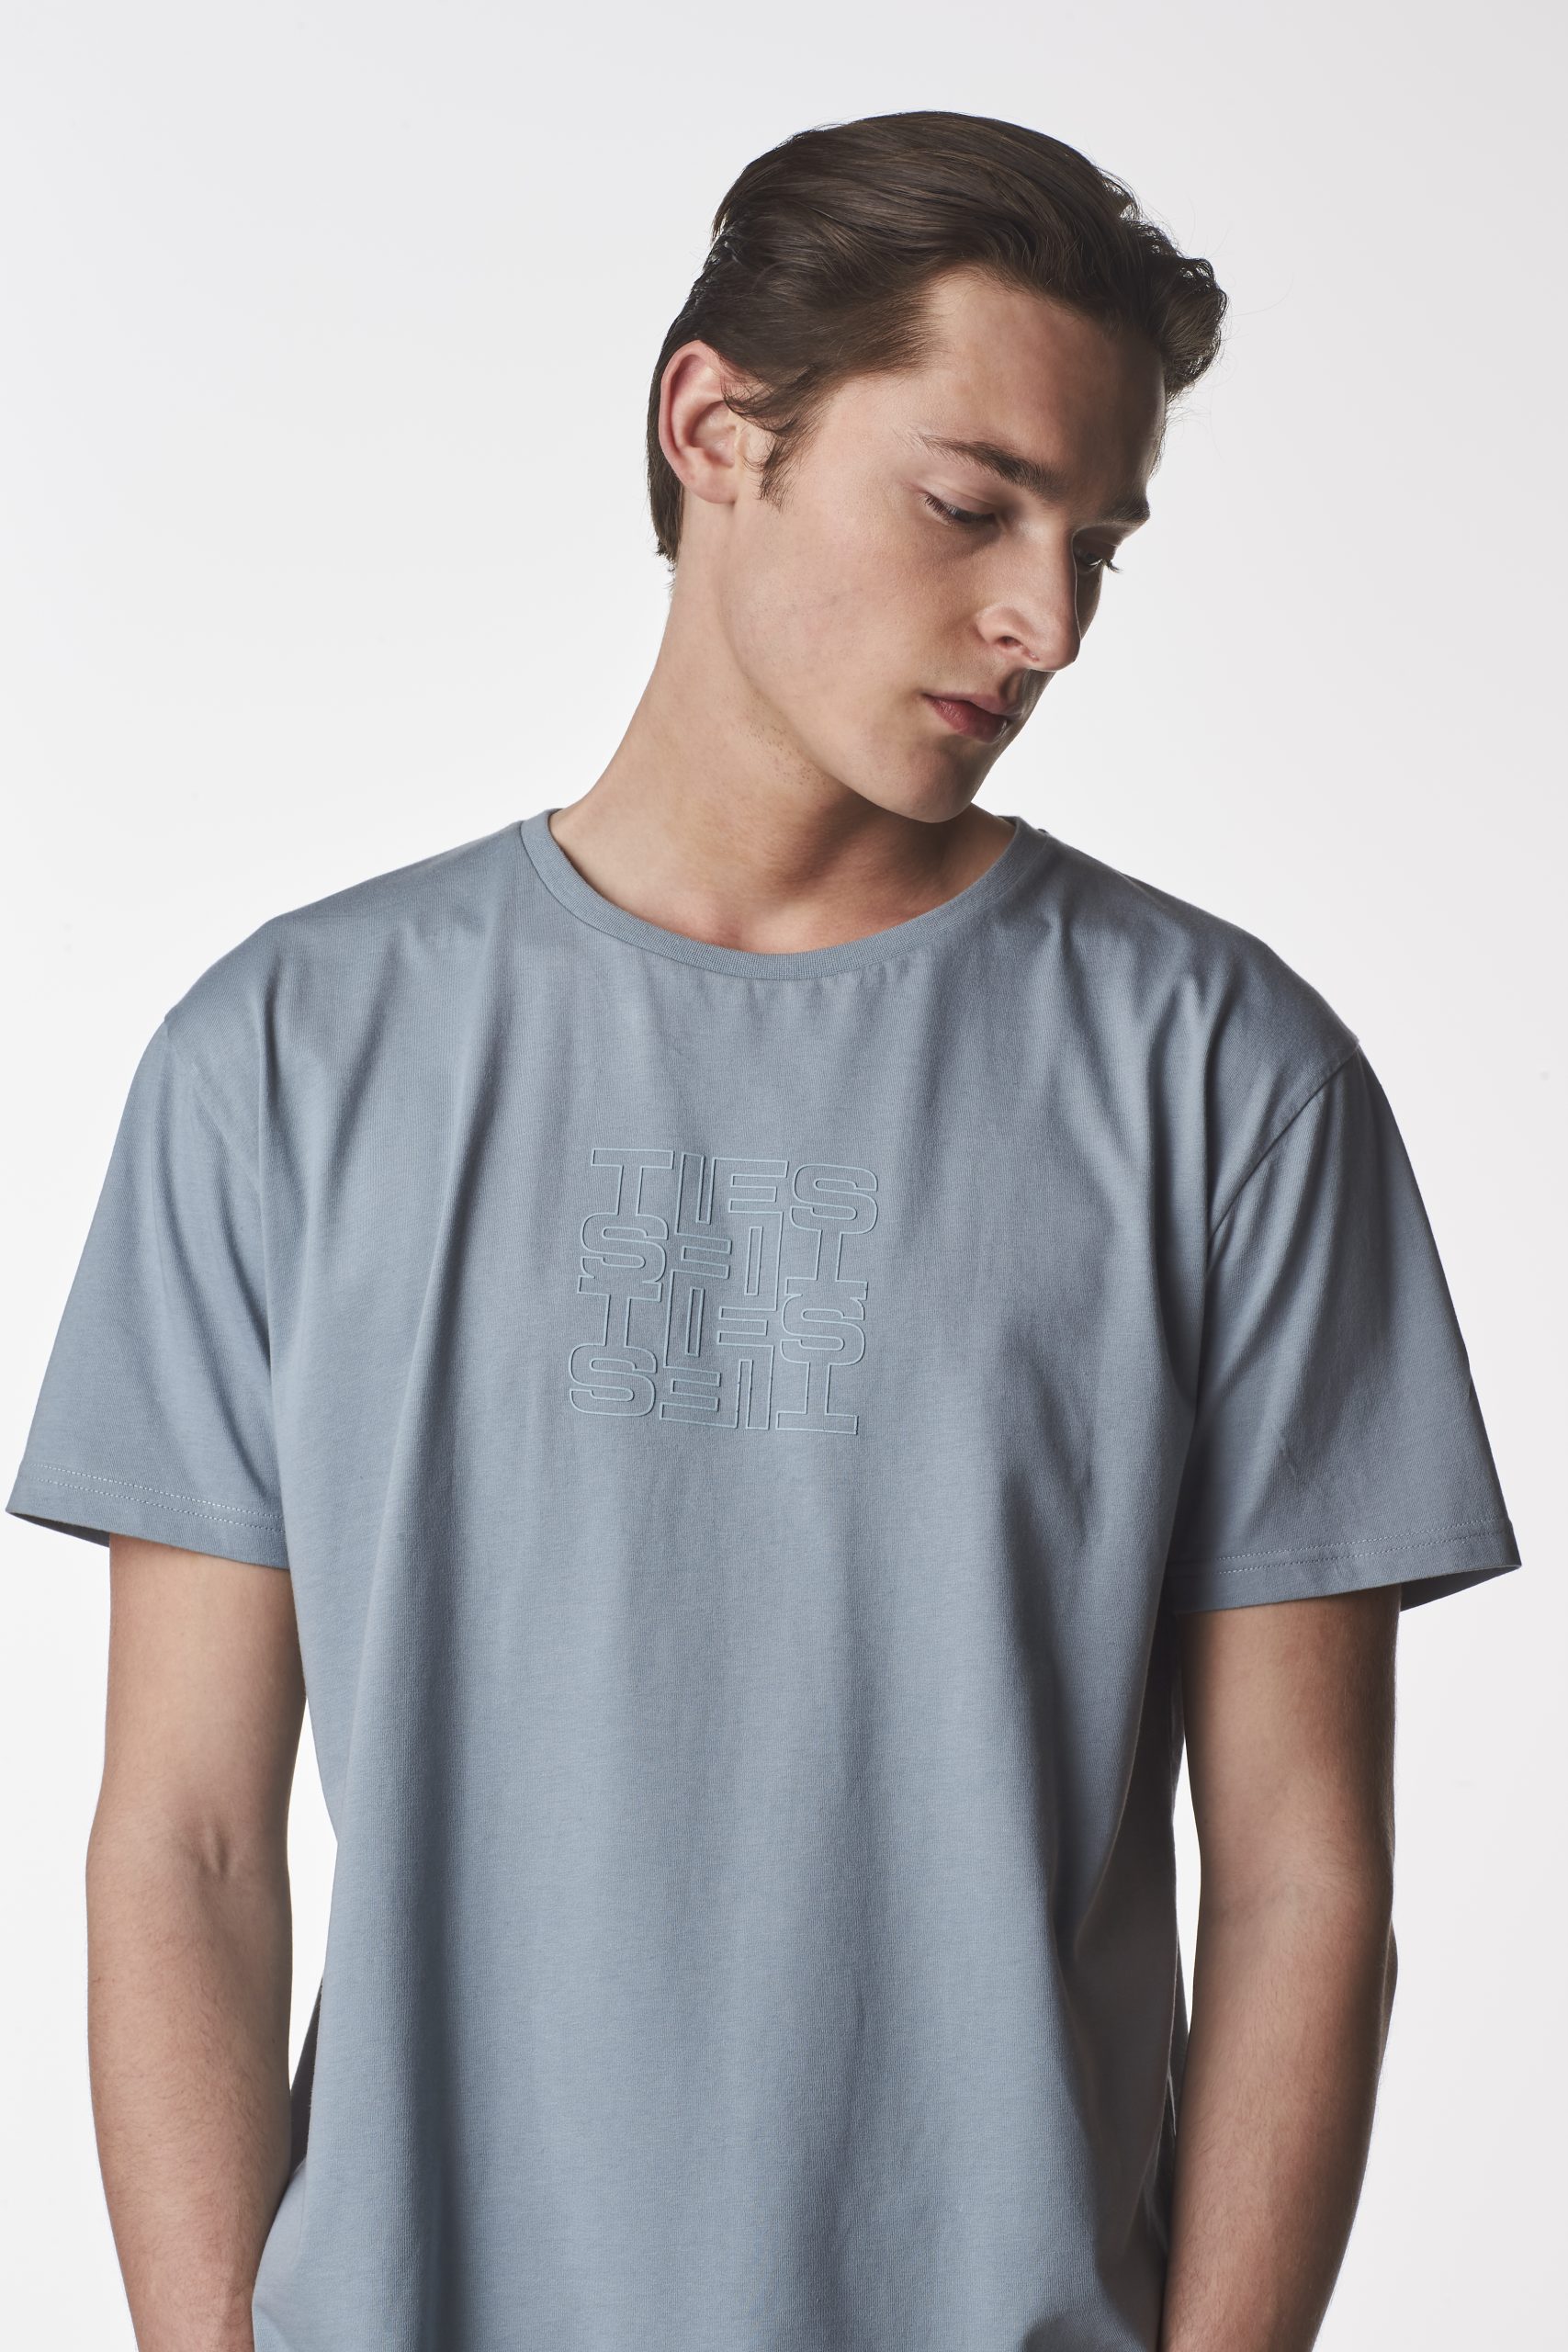 TIES t-shirt regular fit light blue – Ties